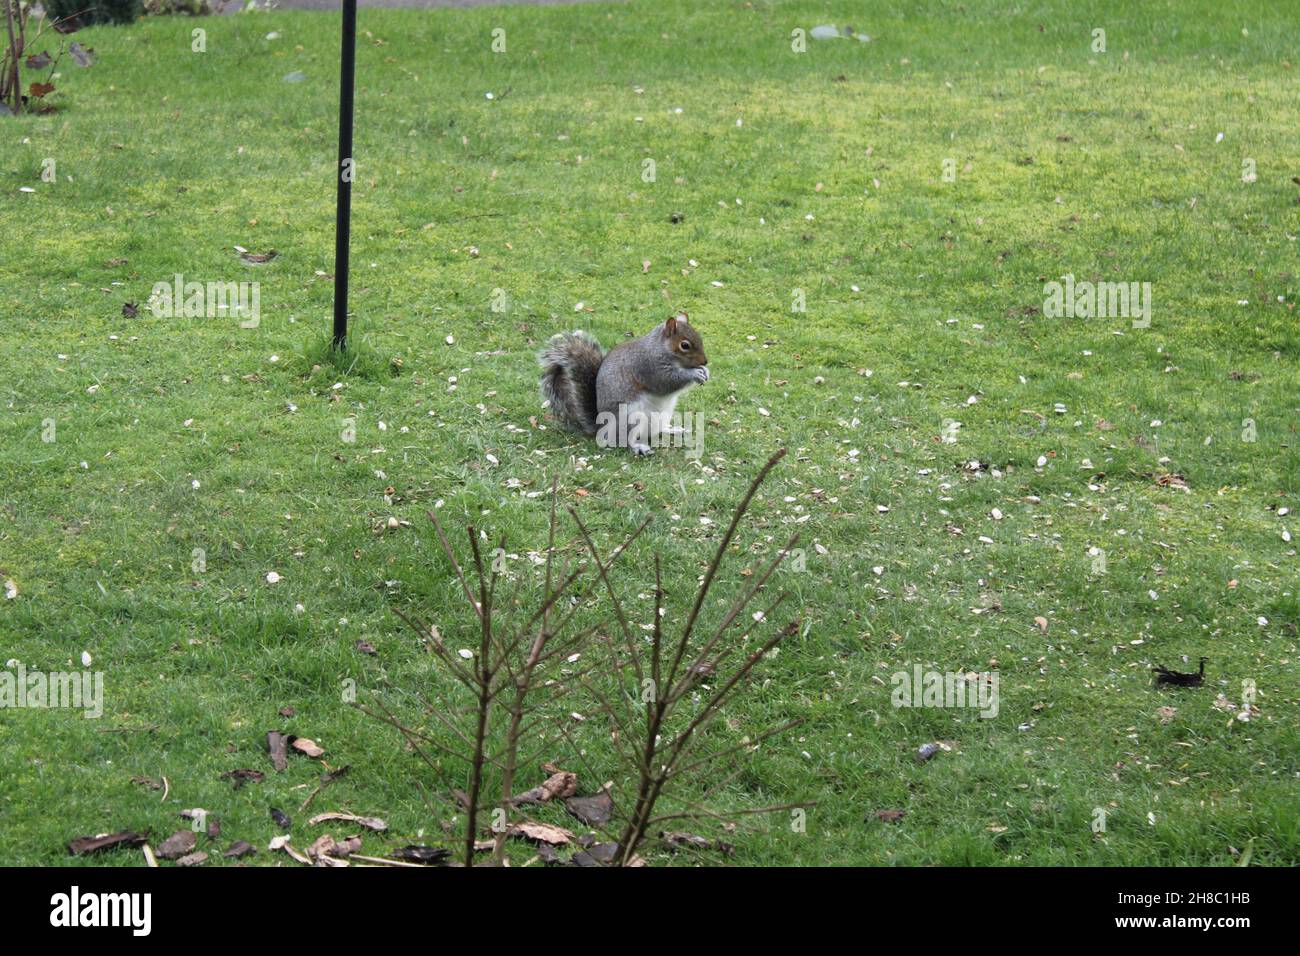 Grey squirrel latin name Sciurus carolinensis sat on grass in a uk garden eating sunflower seeds. Attracting wildlife to your garden concept Stock Photo